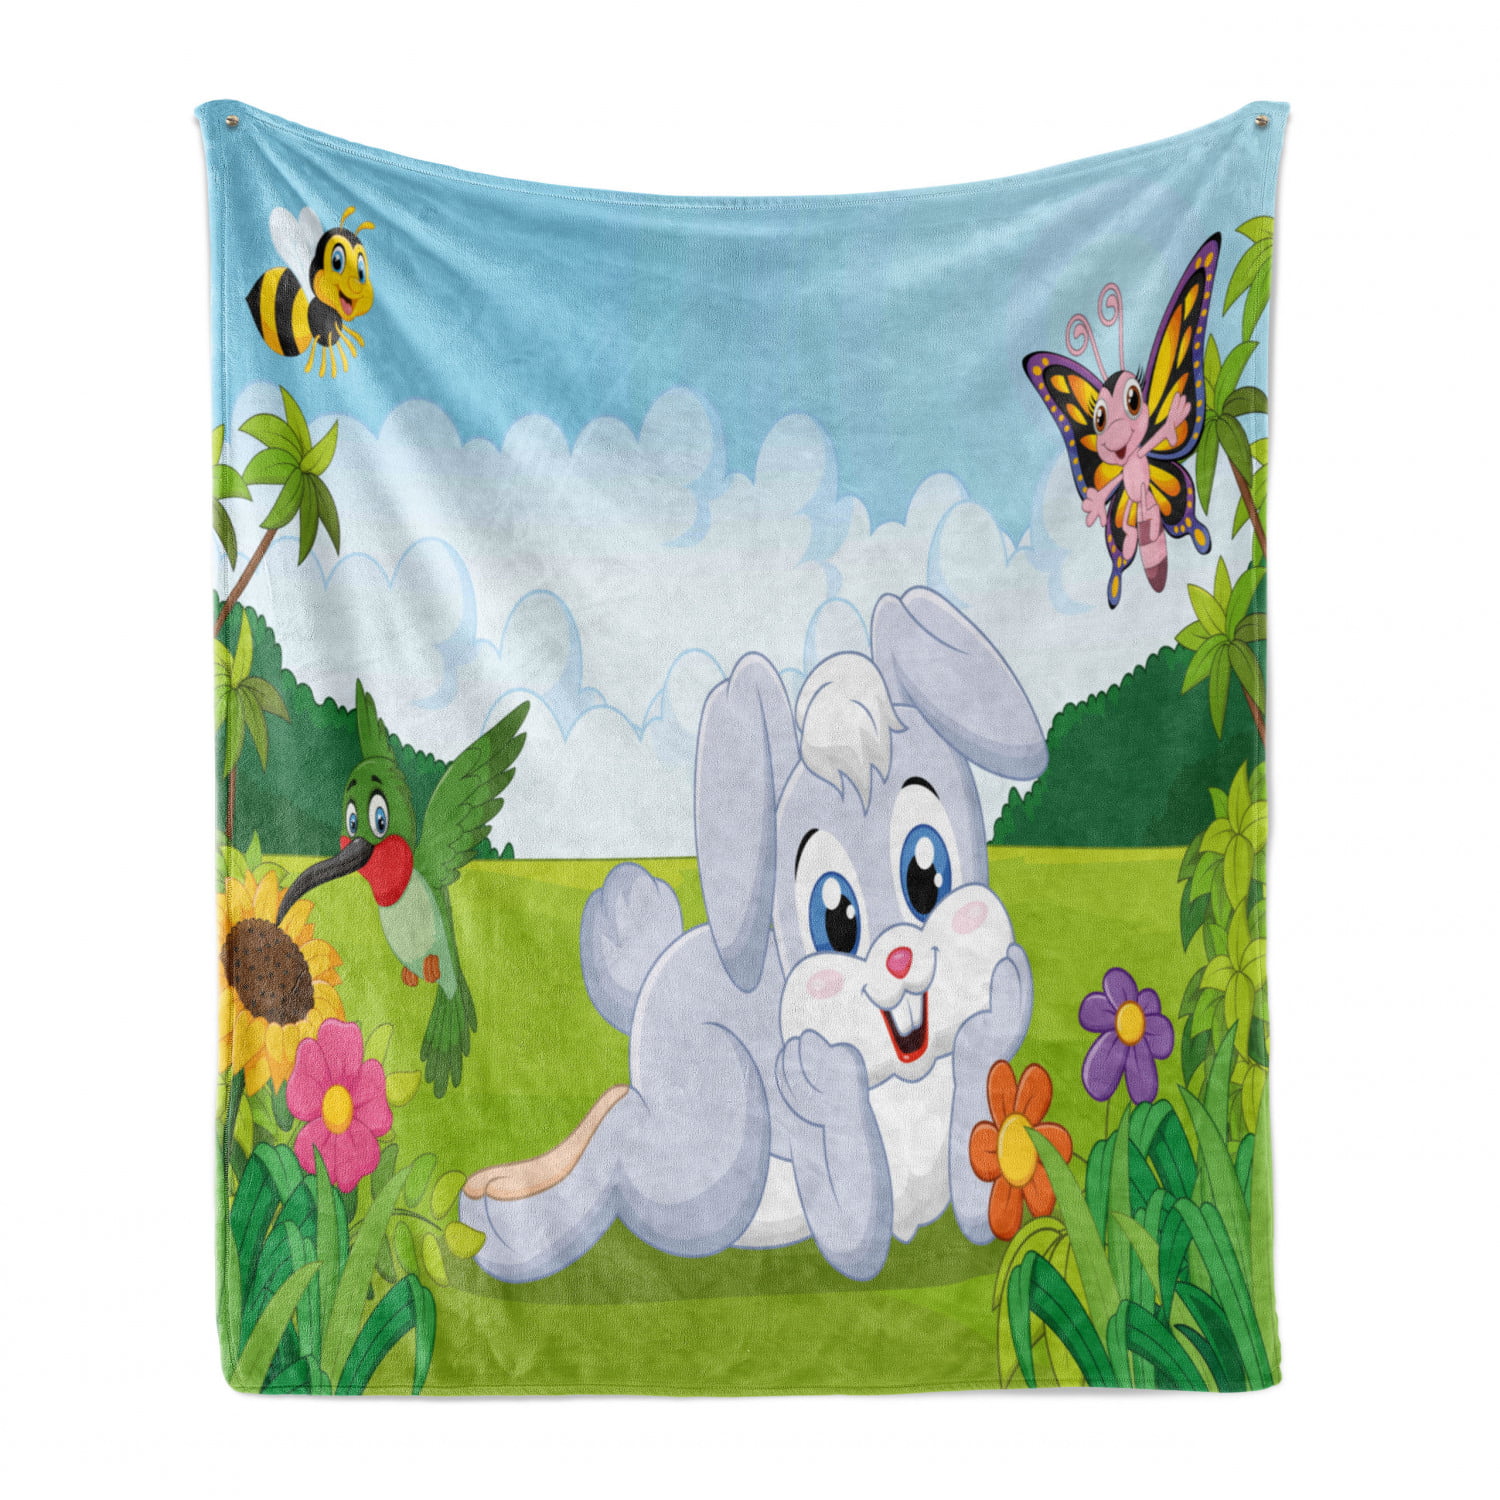 Koala Baby and Yellow Bees Ultra Soft Micro Fleece Blanket 60x50 Warm Comfortable Fuzzy Flannel Throw Blanket All Season Bed Soft Living Room Dorm 